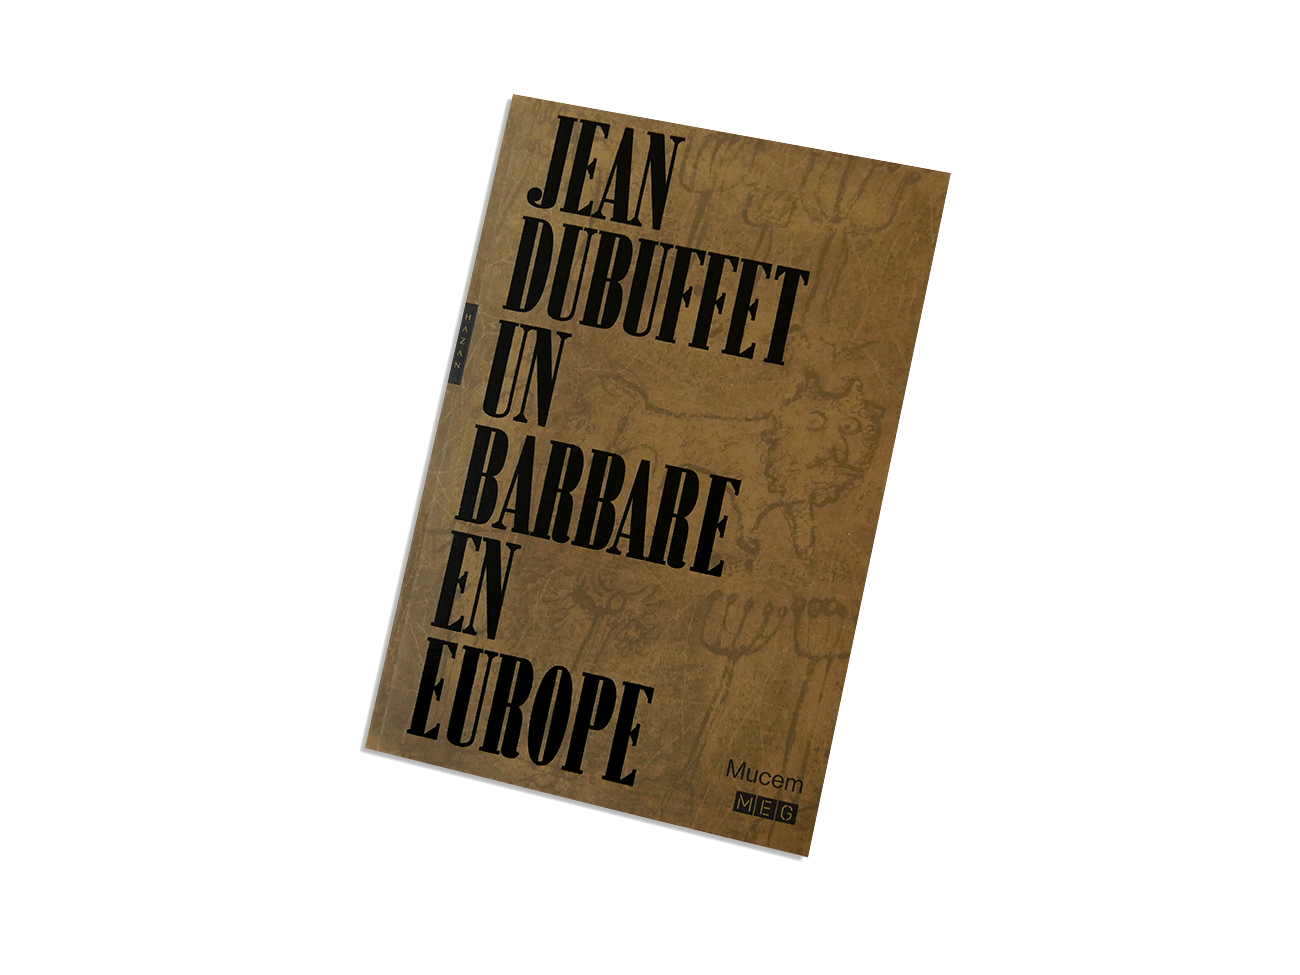 Catalogue d'exposition Jean Dubuffet, un barbare en Europe, Mucem